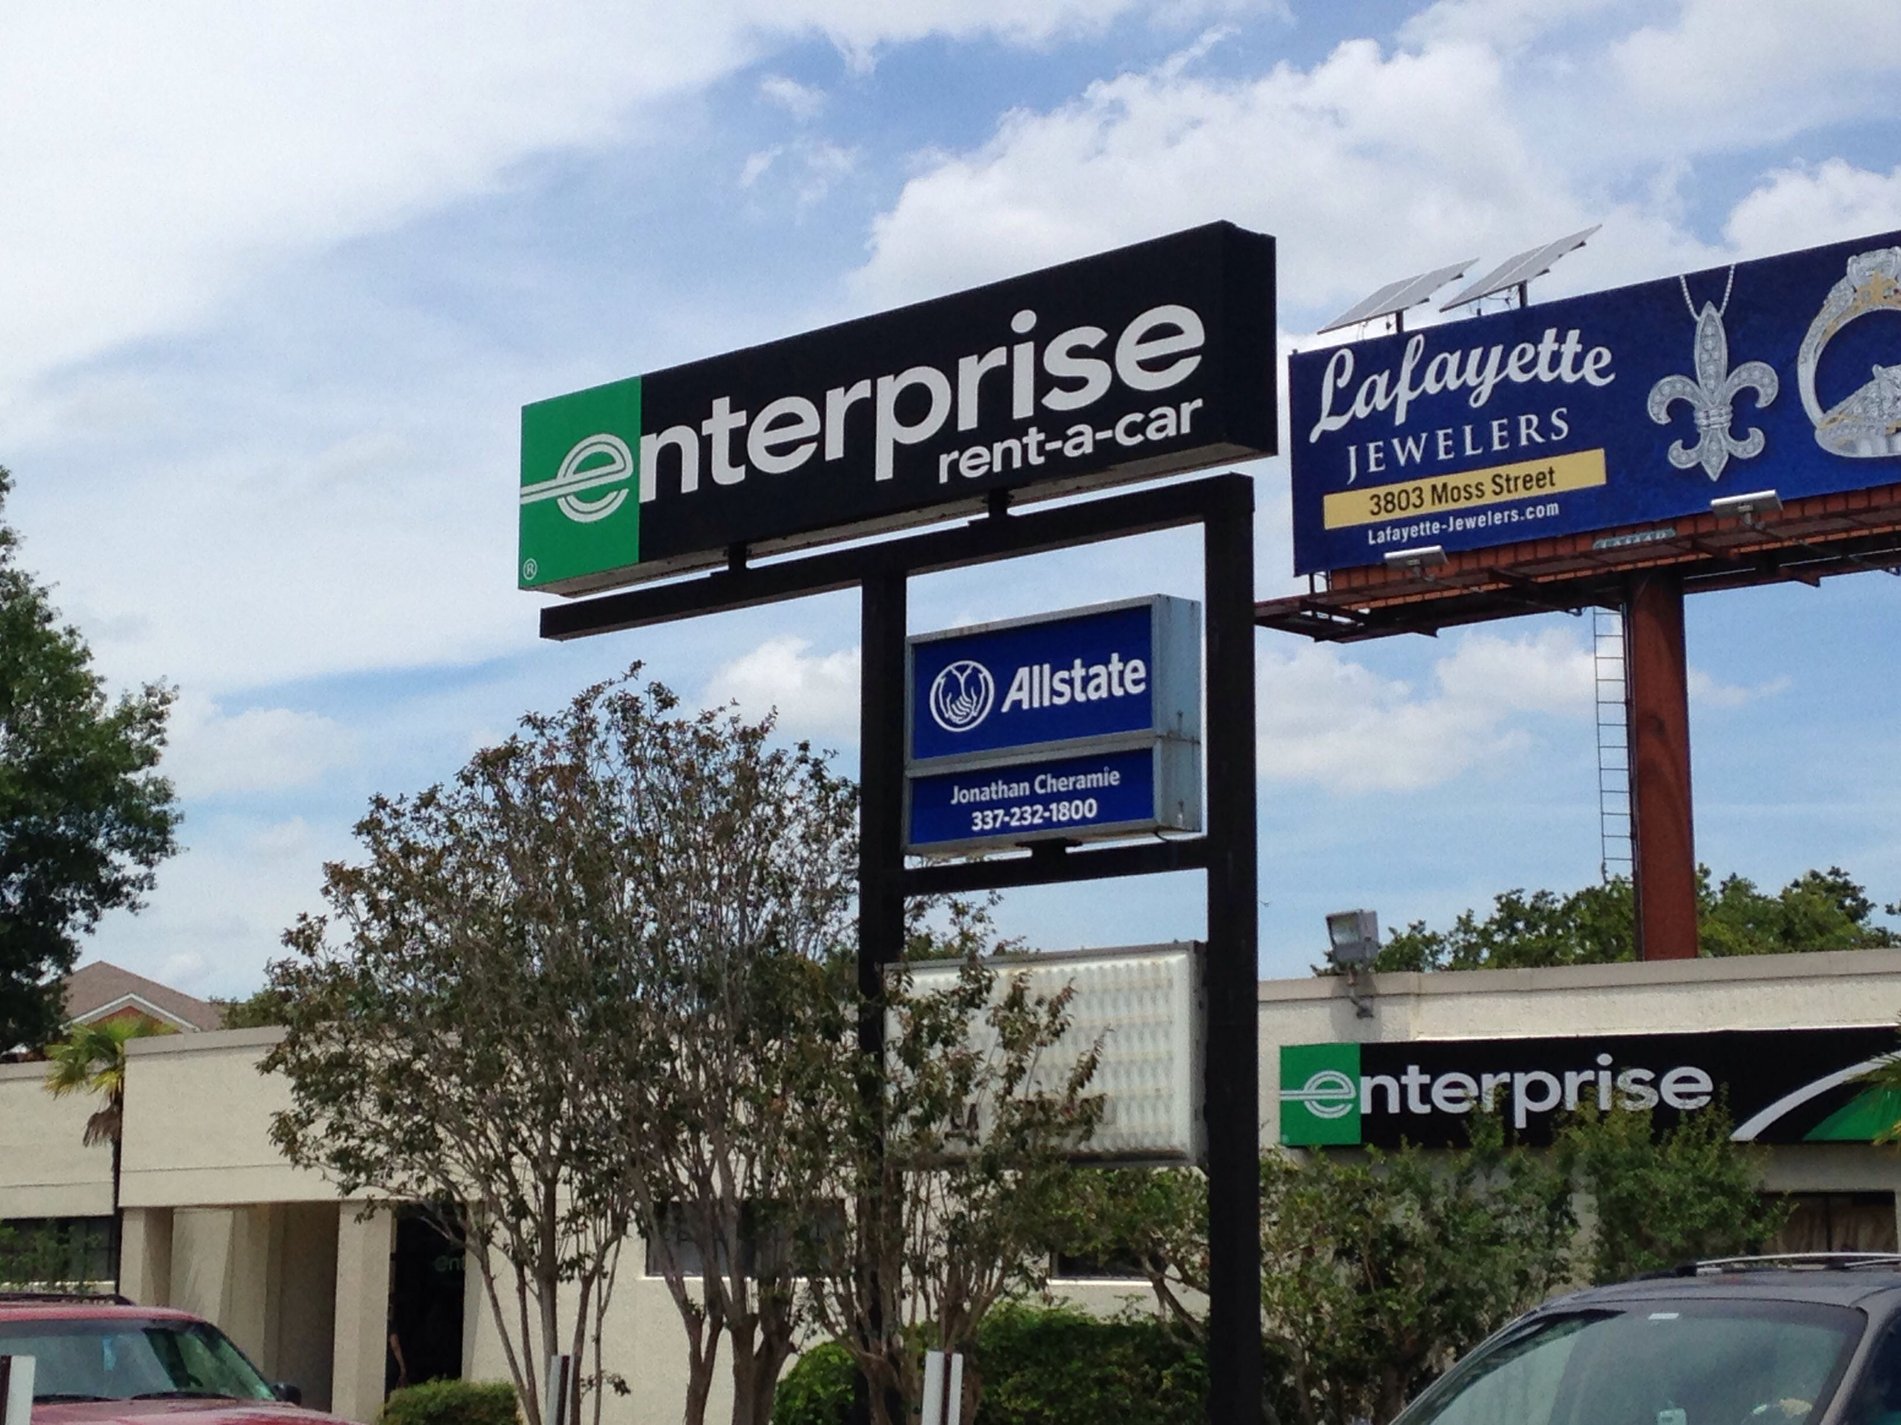 Allstate | Car Insurance in Lafayette, LA - Jonathan Cheramie